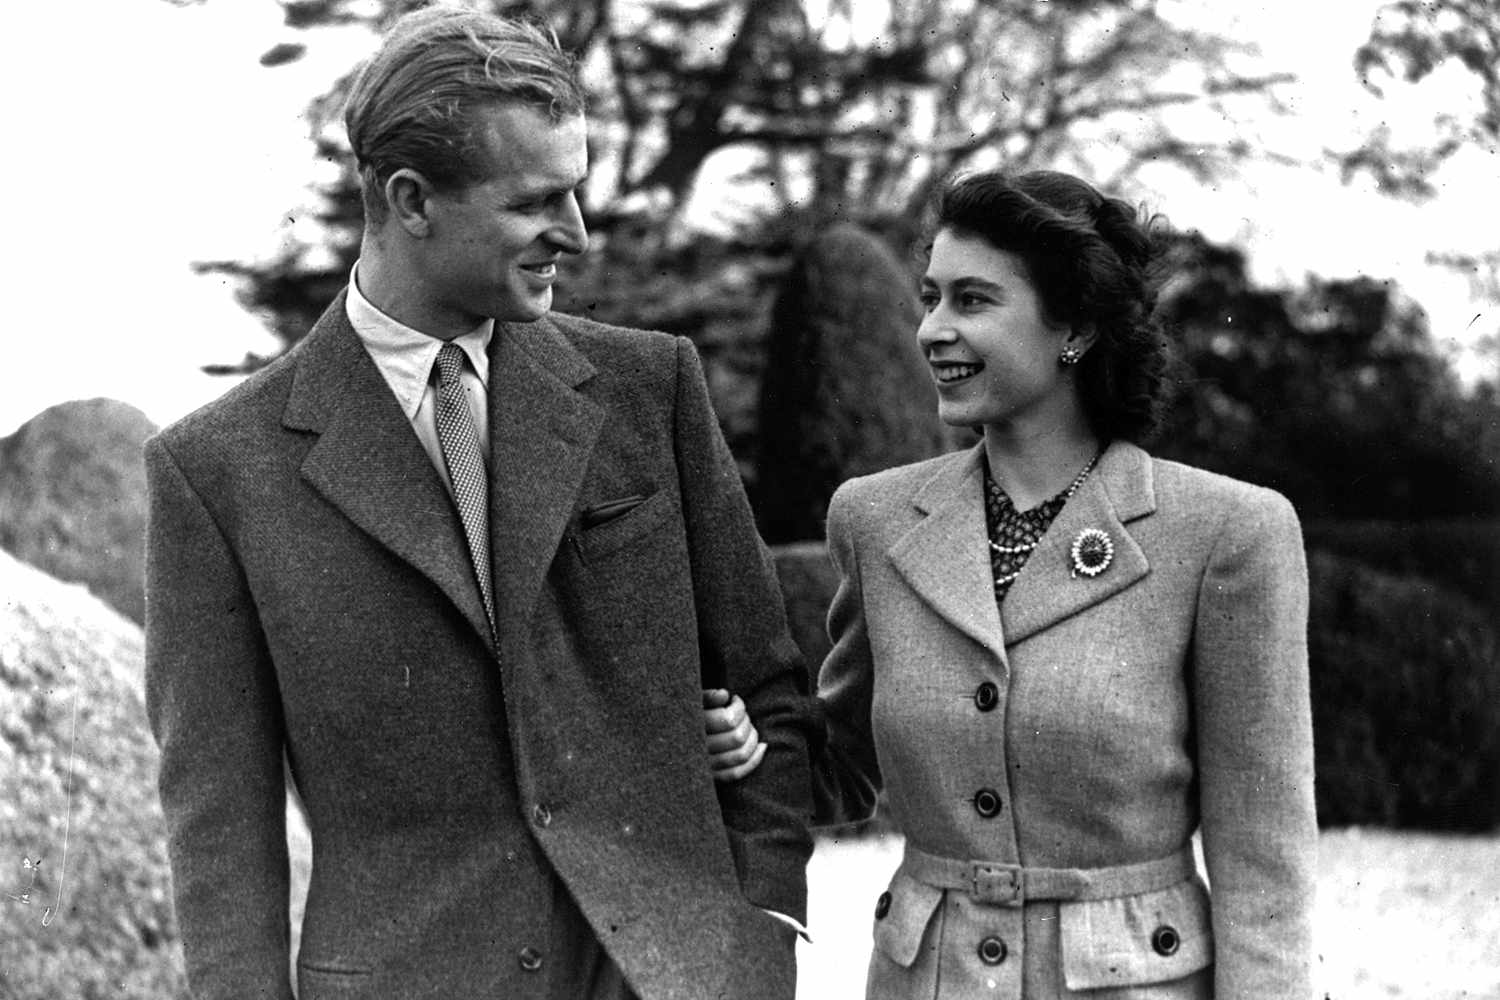 Princess Elizabeth and The Prince Philip, Duke of Edinburgh enjoying a walk during their honeymoon